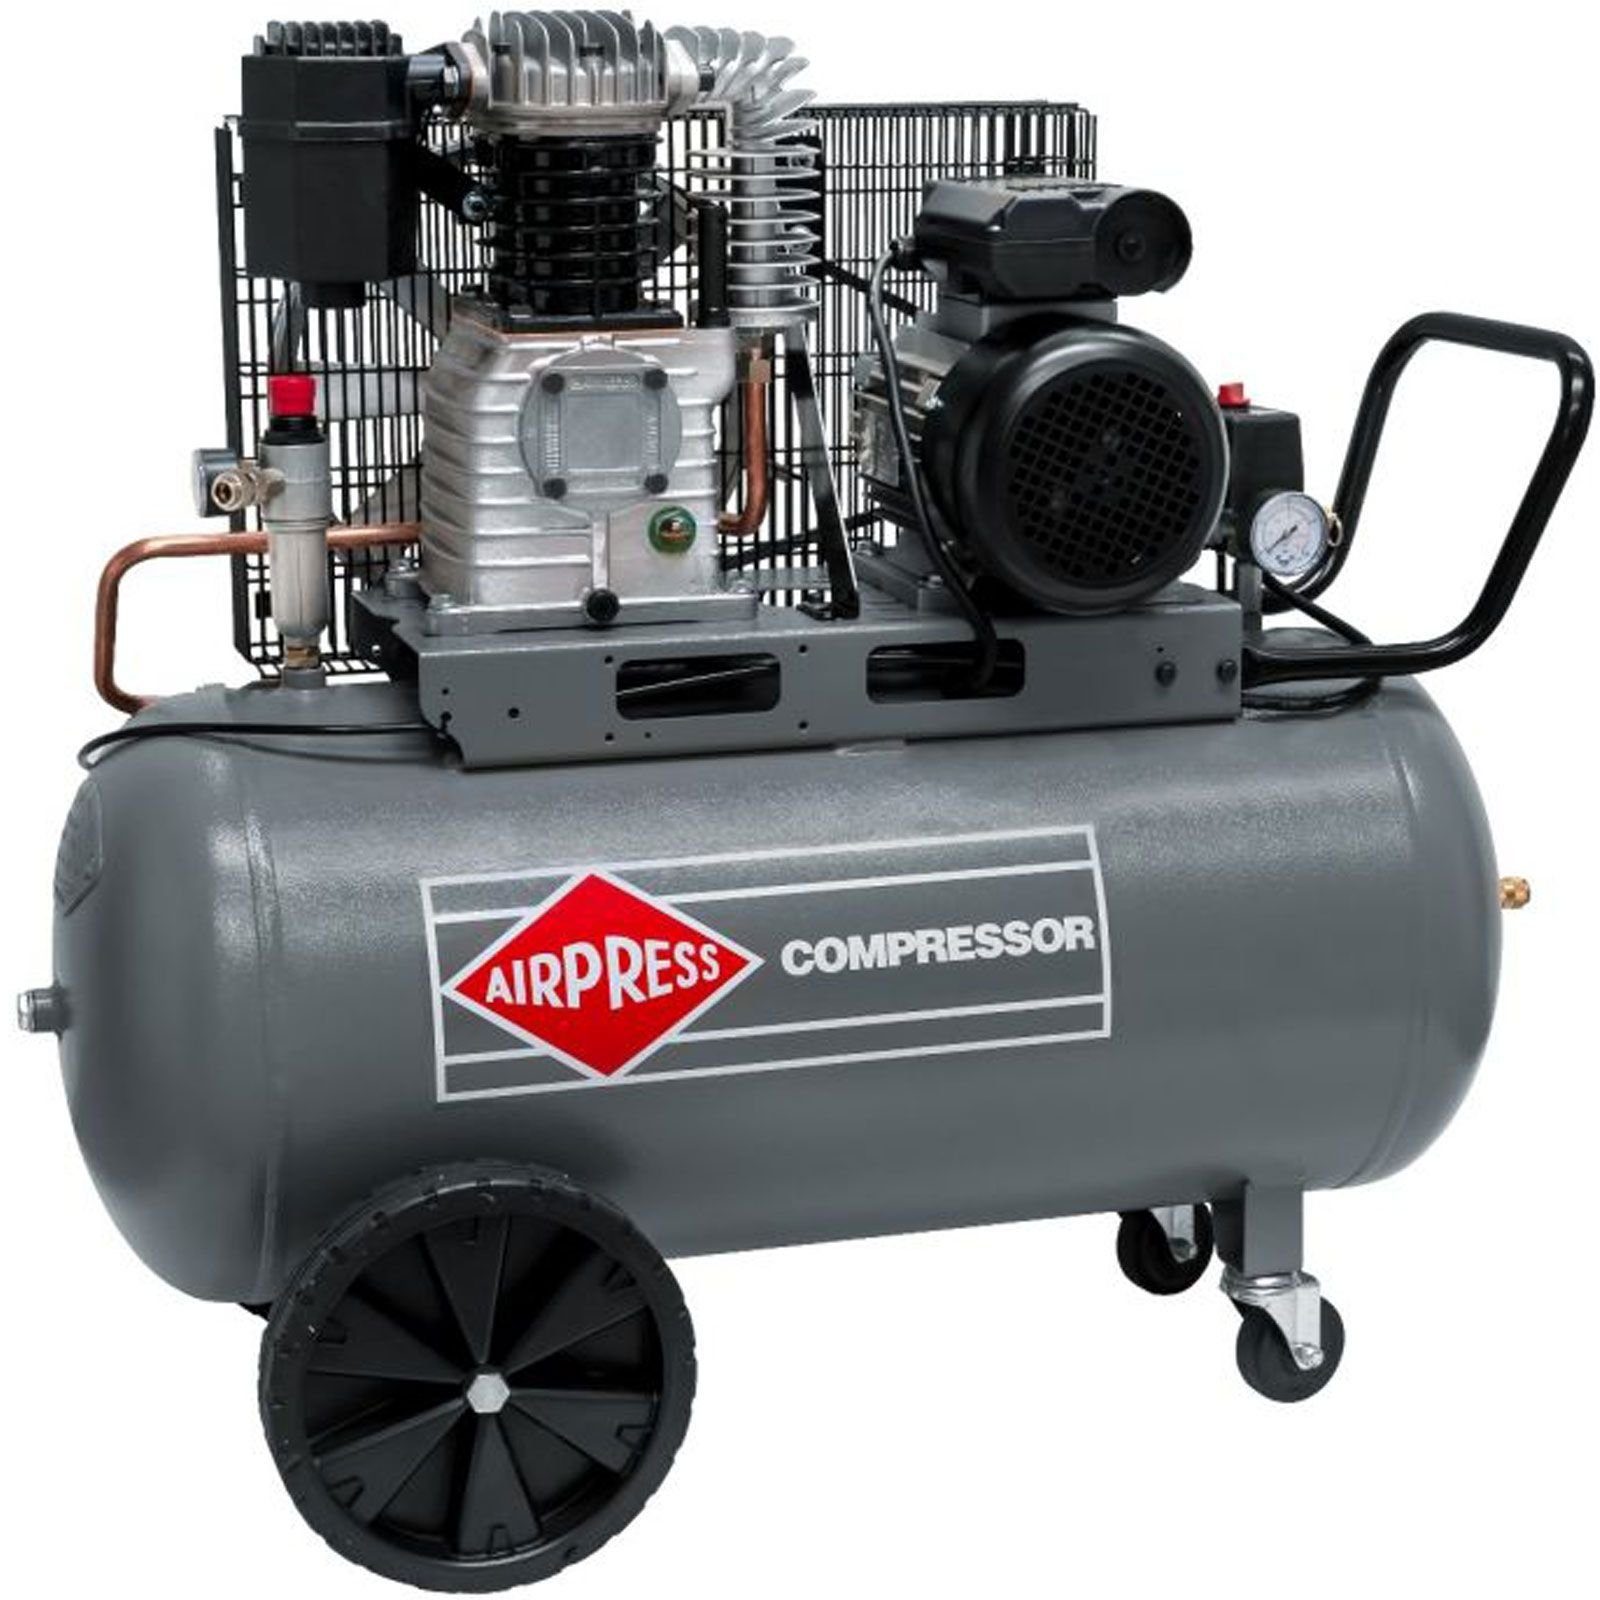 Kompressor Silent 2 PS 38 Liter 8 bar LMO 40-250 Typ 36854 - Online S